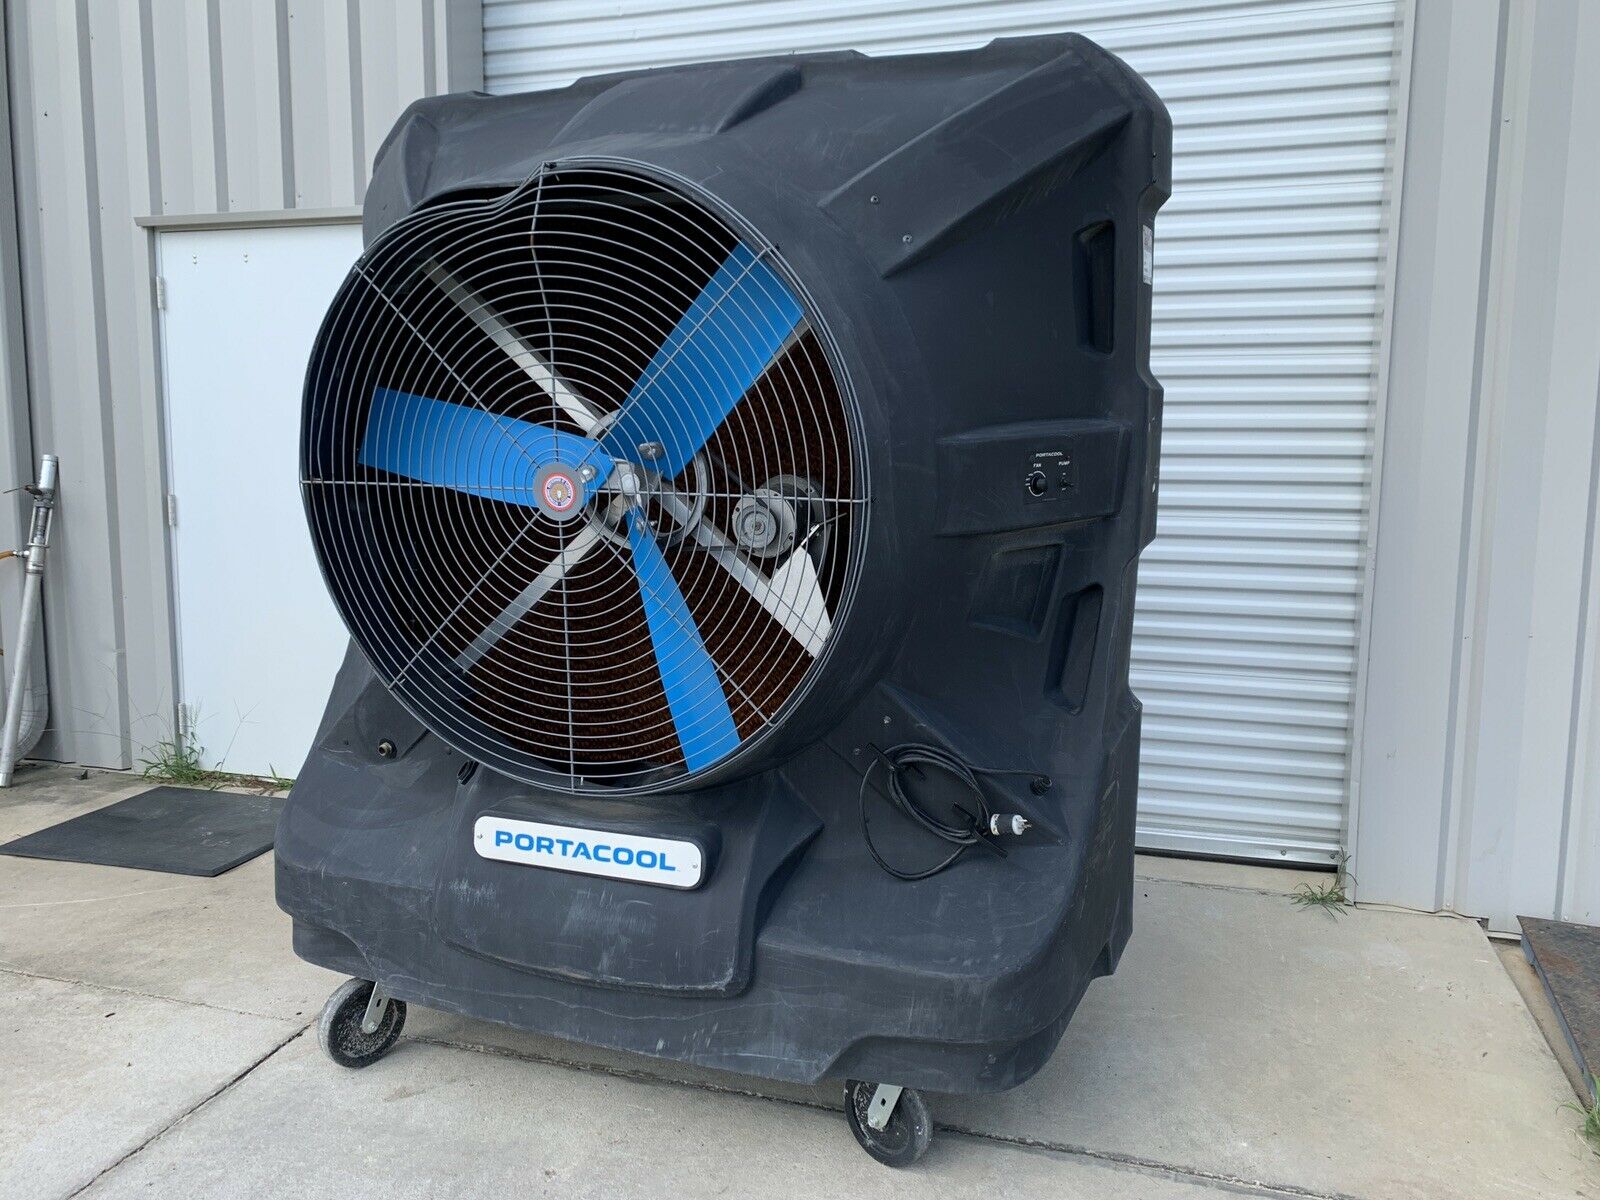 Portacool Jetstream 270 Evaporative Air Cooler/ Fan / Swamp Cooler